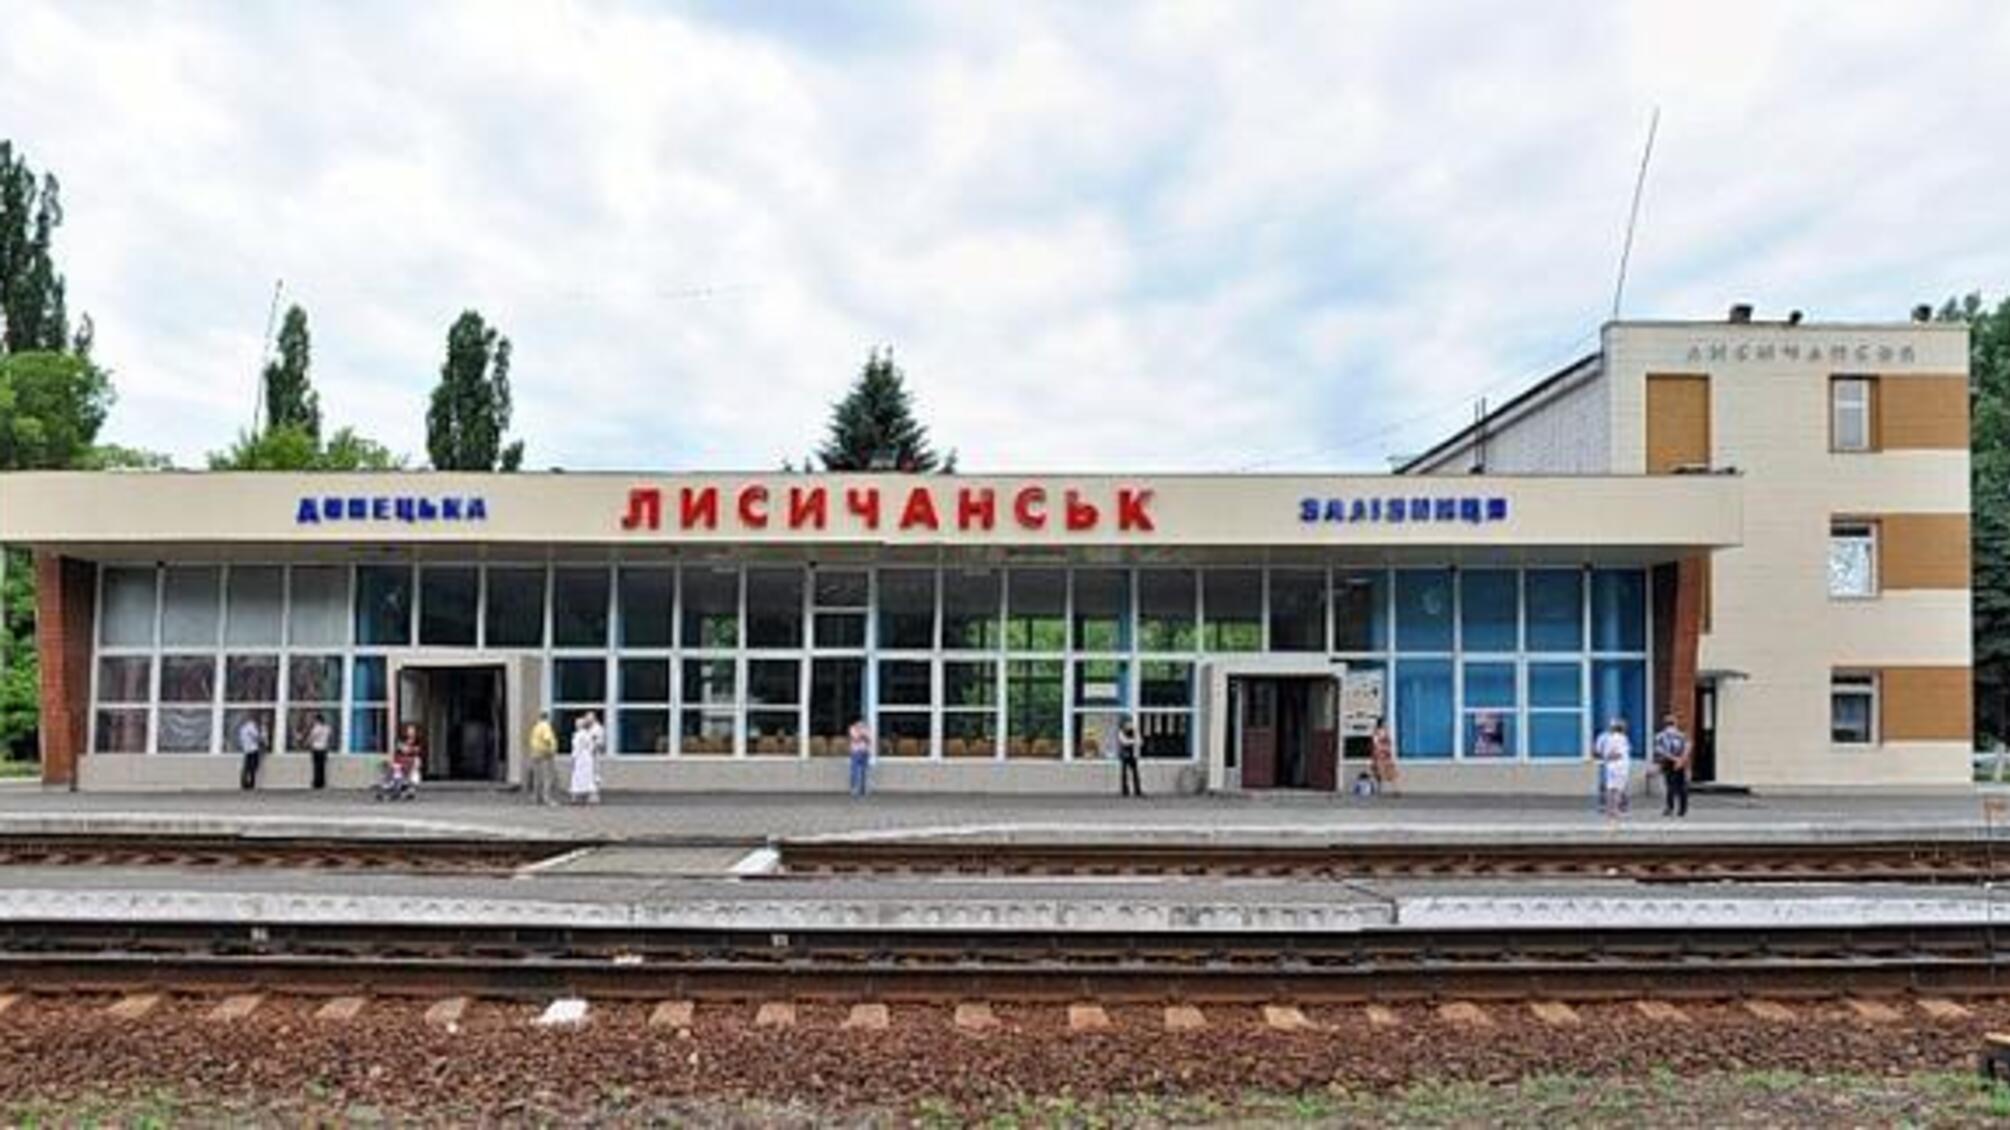 Начальниця вокзалу станції 'Лисичанськ' попалася на хабарі